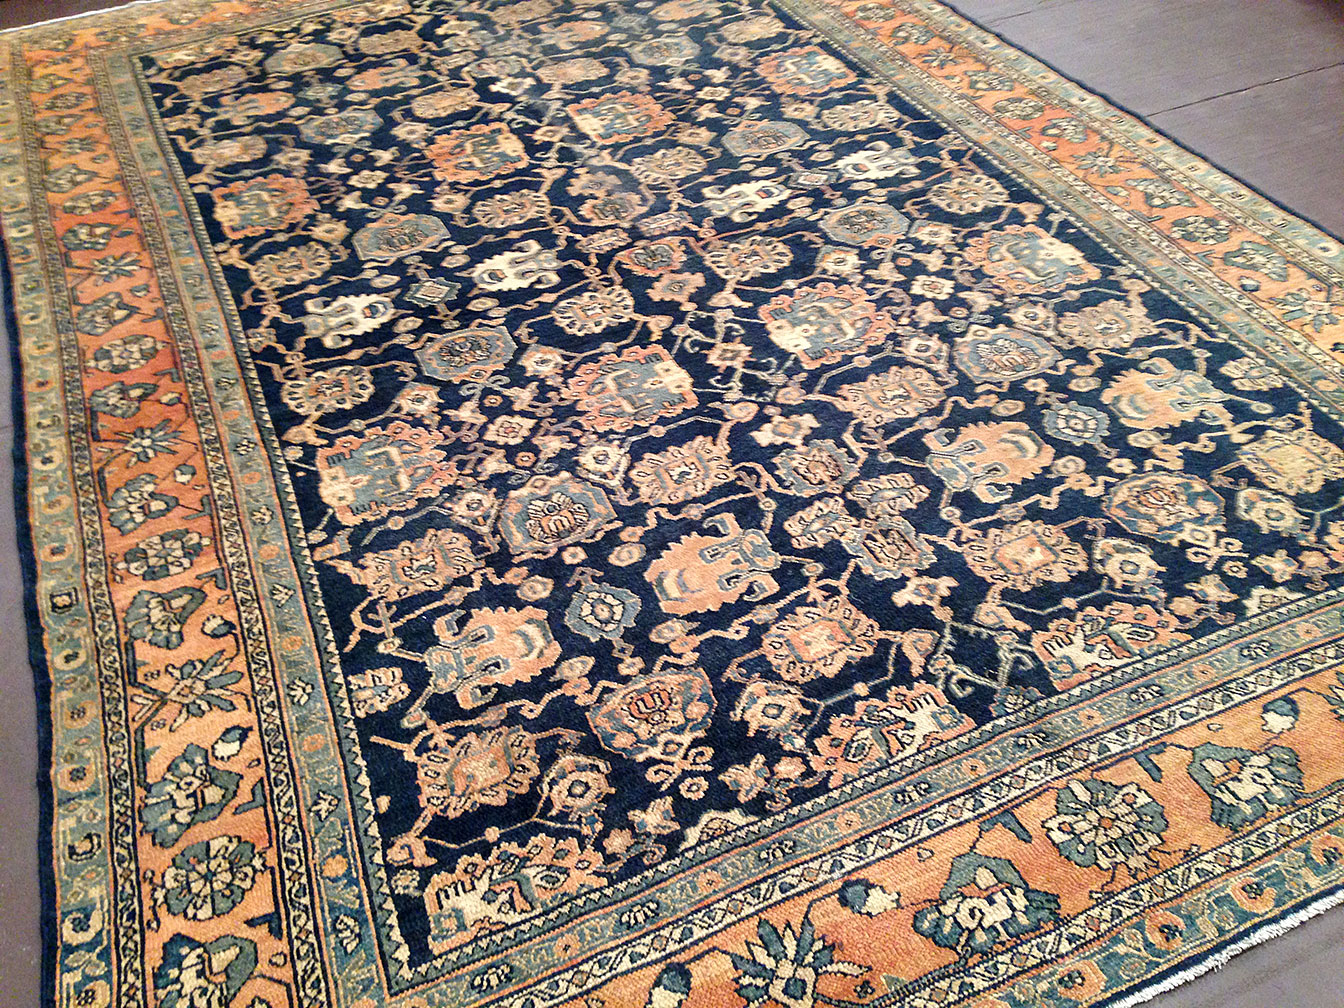 Antique bibi kabad Carpet - # 50686